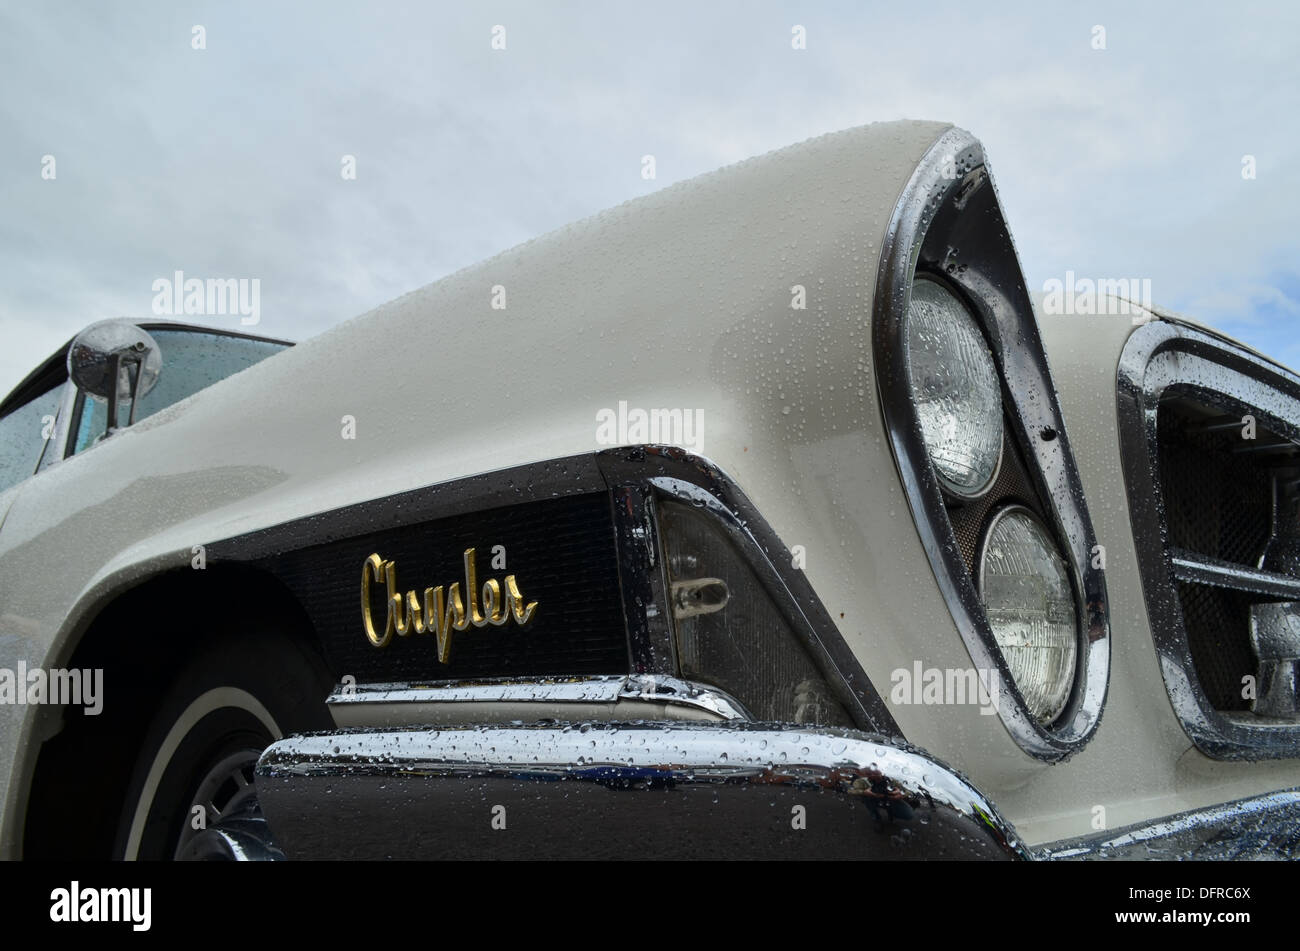 Classic Chrysler automobile Stock Photo